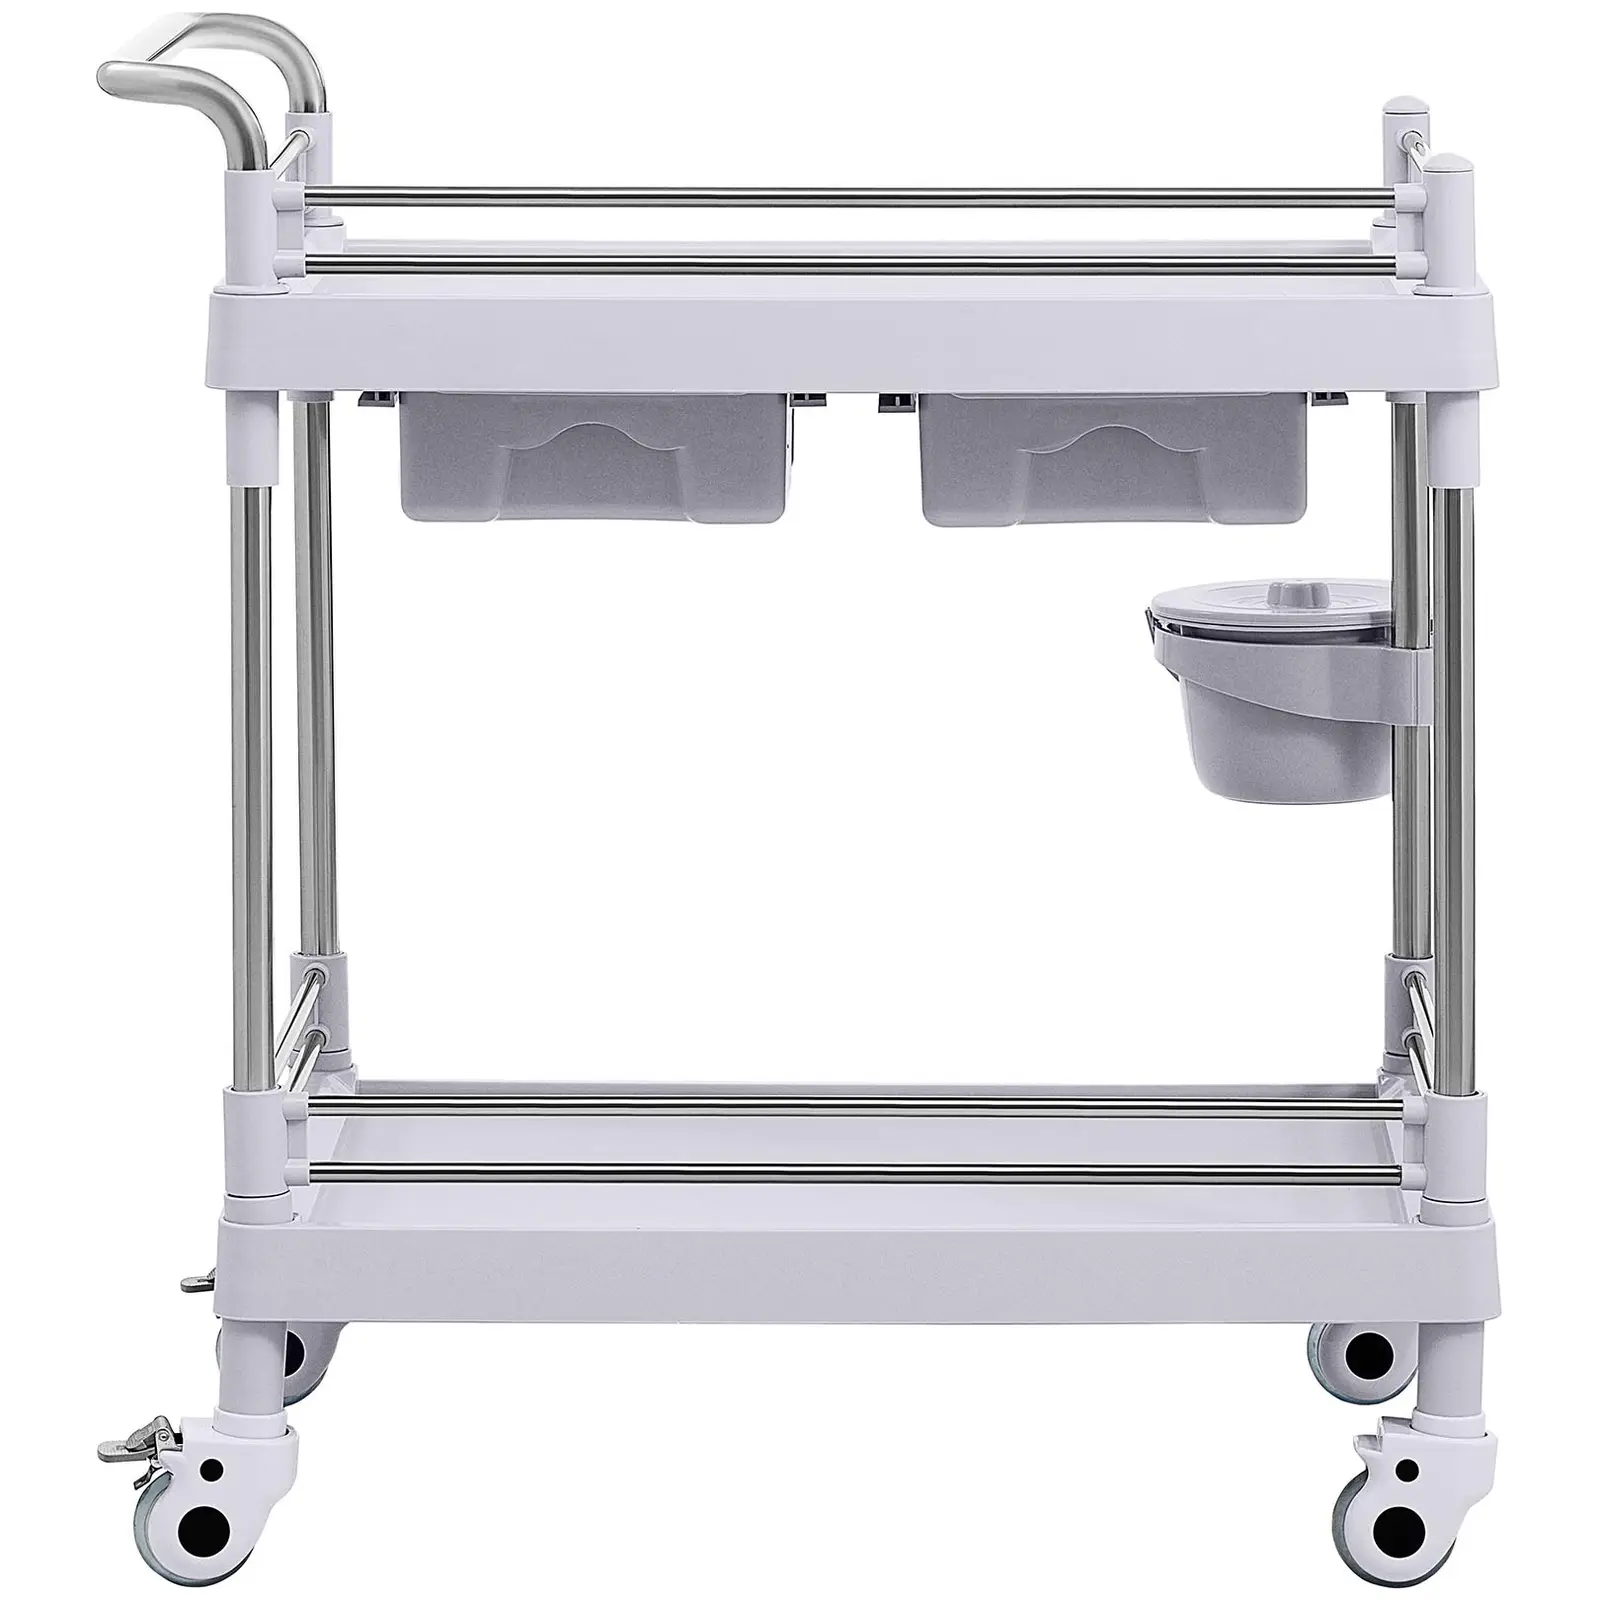 B-varer Laboratory Trolley - 2 shelves each 65 x 46 x 14 cm - 2 drawers - 40 kg